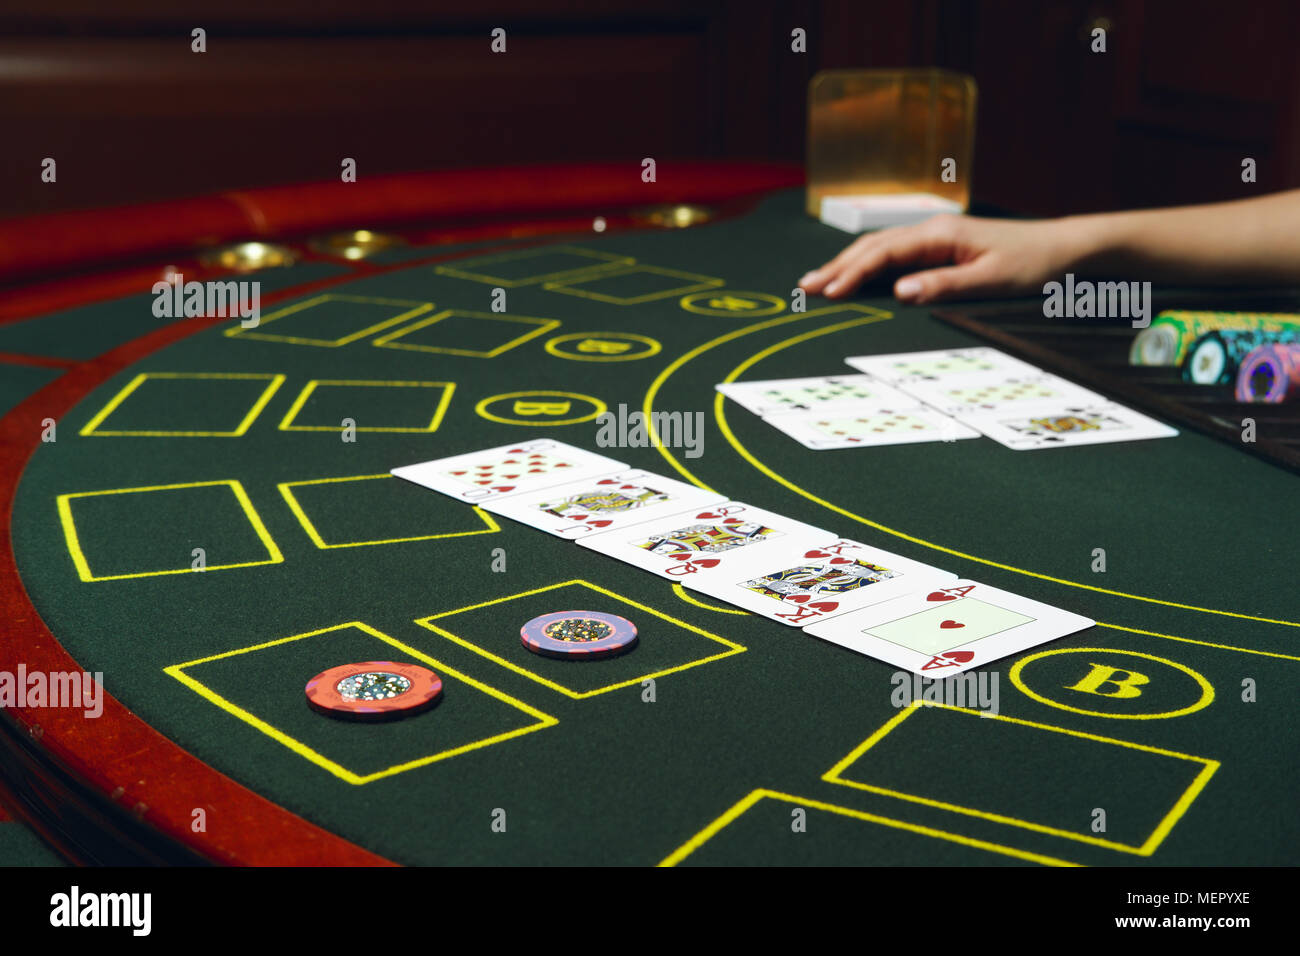 Amscan Casino Jeu Blackjack feutre Table Housses 